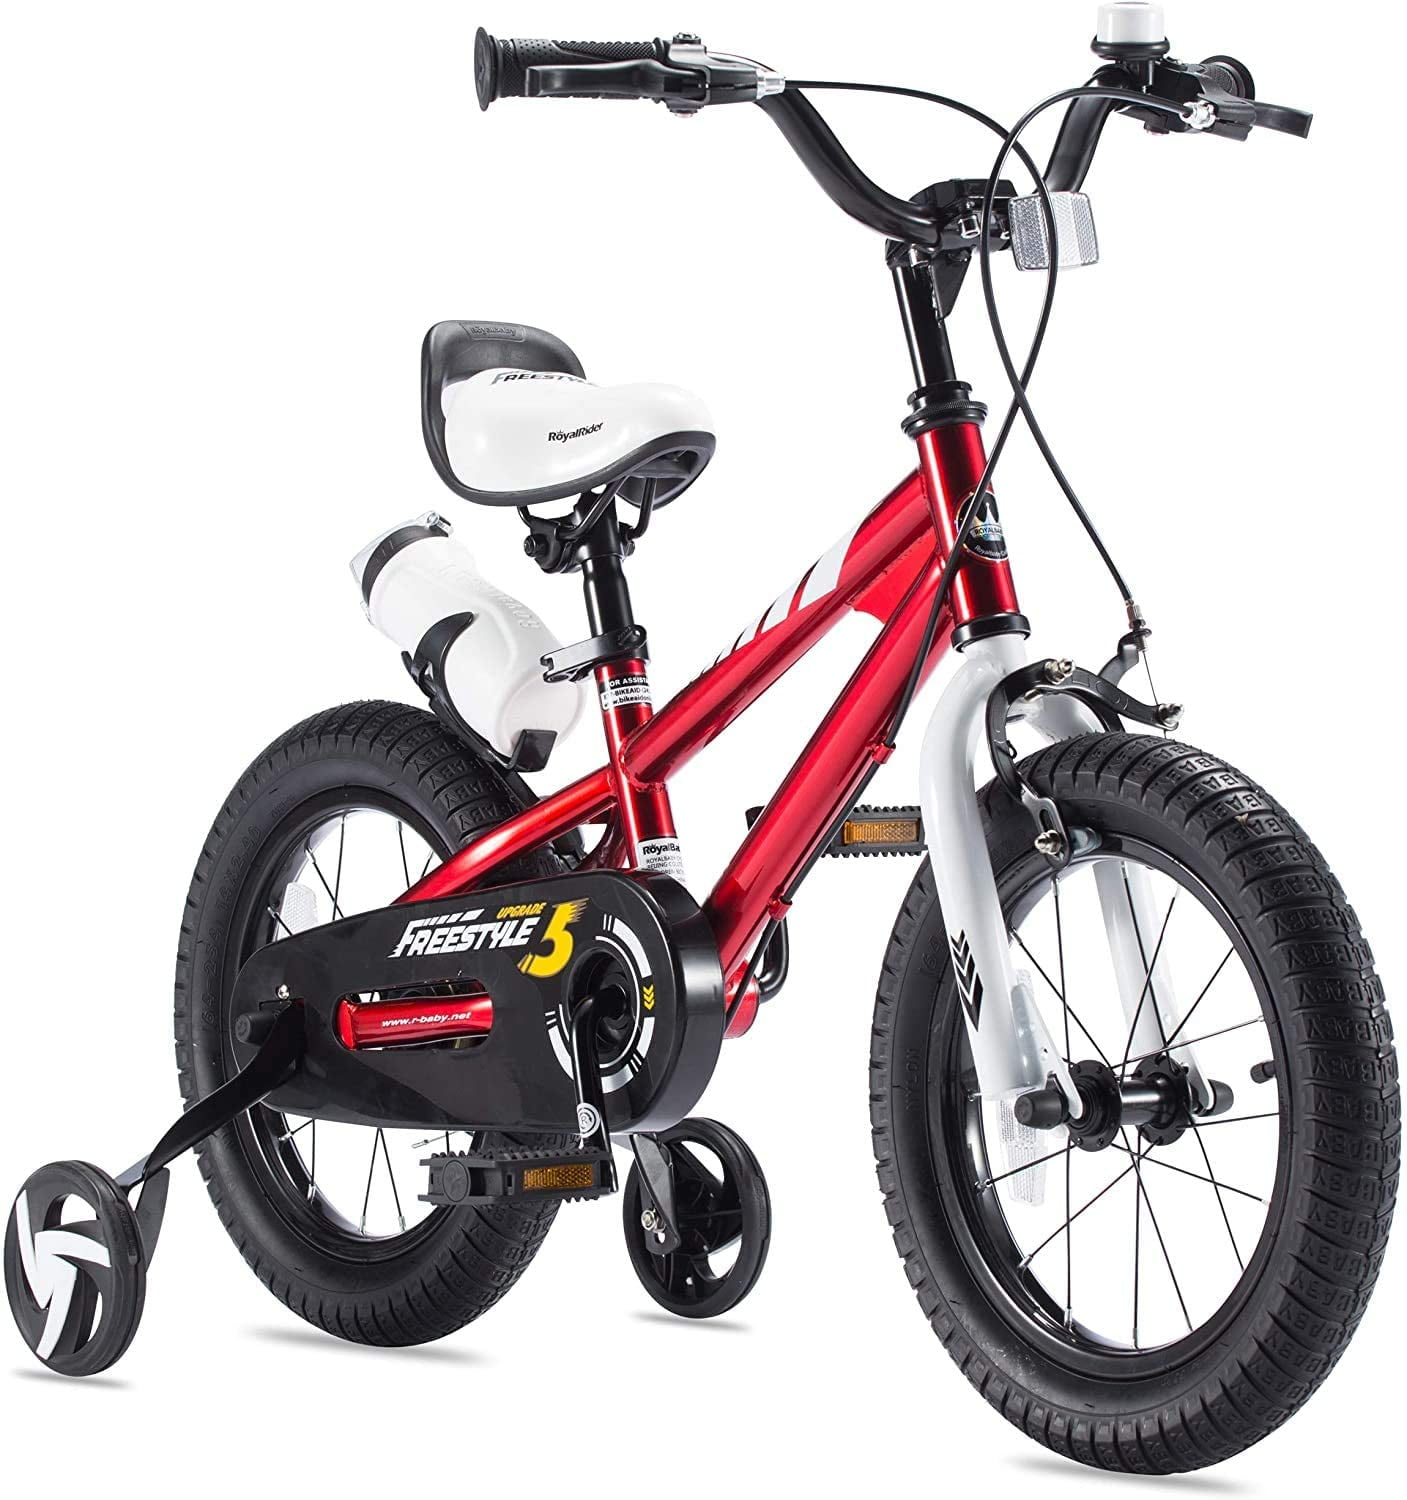 RoyalBaby Boys Girls Kids Bike BMX Freestyle 2 Hand Brakes Bicycles with Training Wheels Child Bicycle